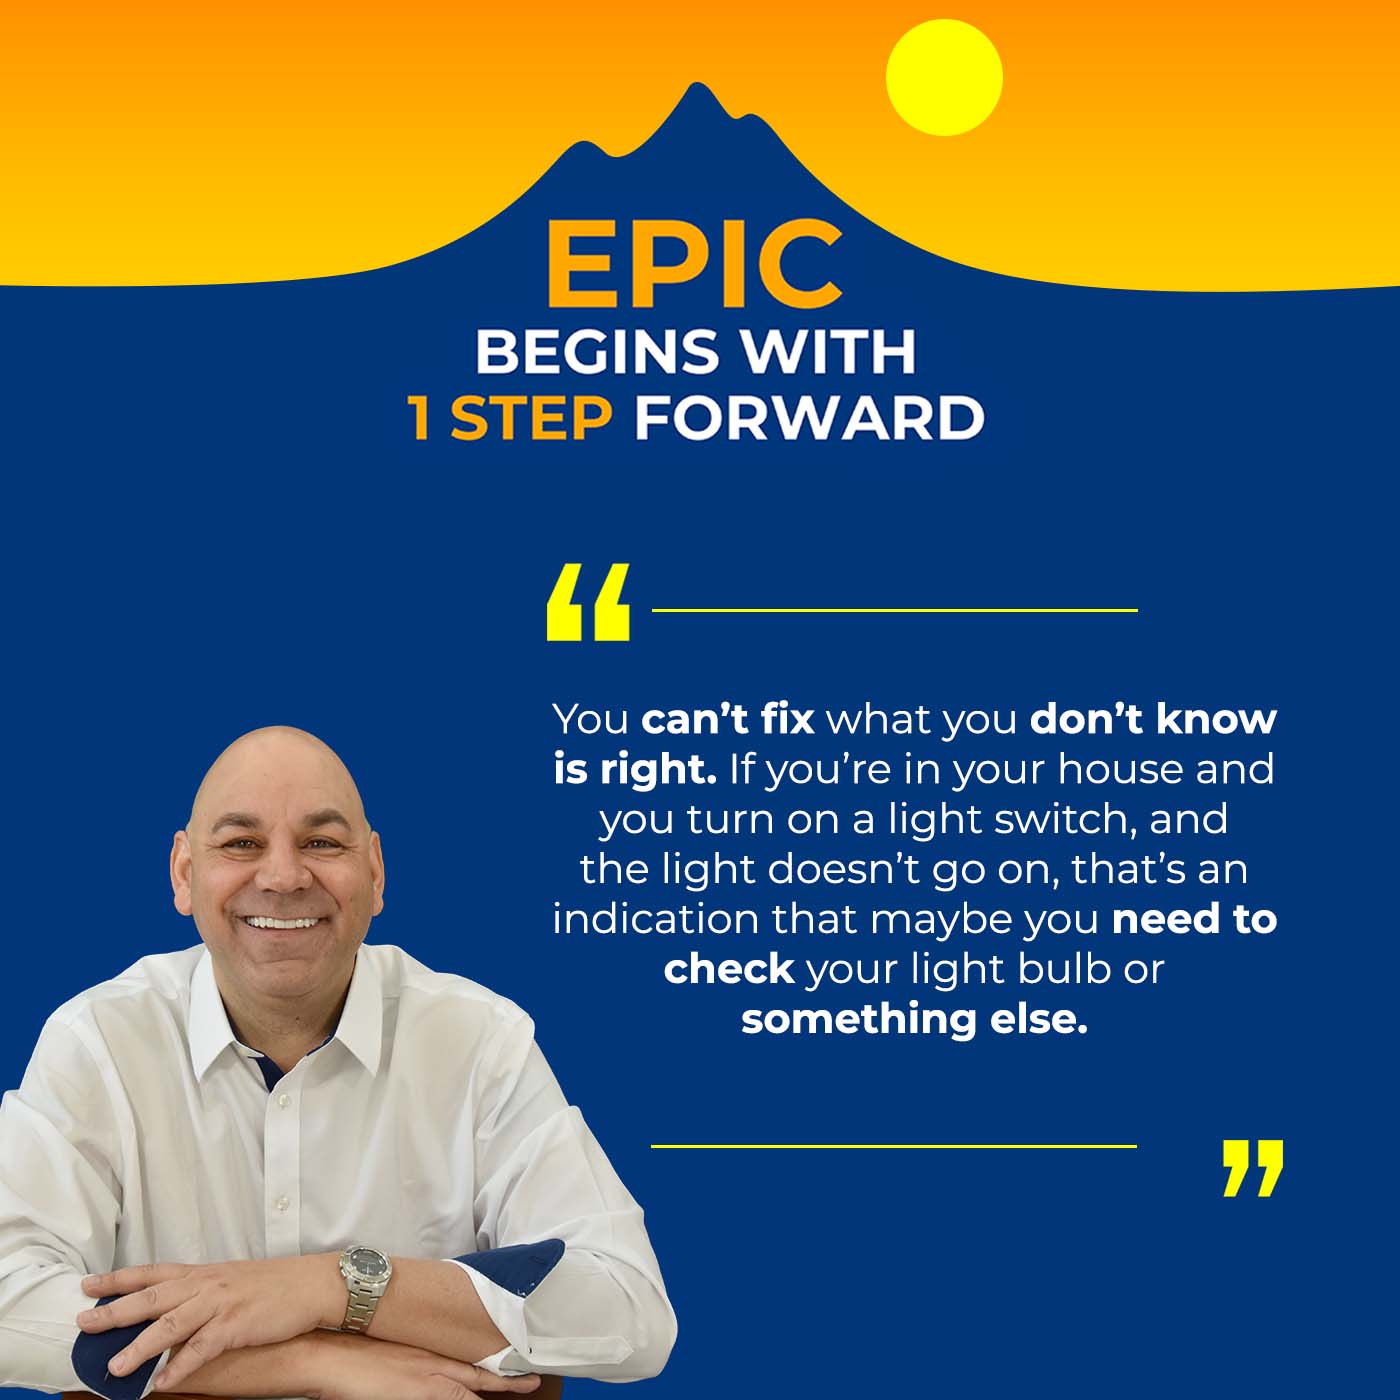 EPIC Begins With 1 Step Forward | Dr. David Bilstrom | Autoimmune Diseases